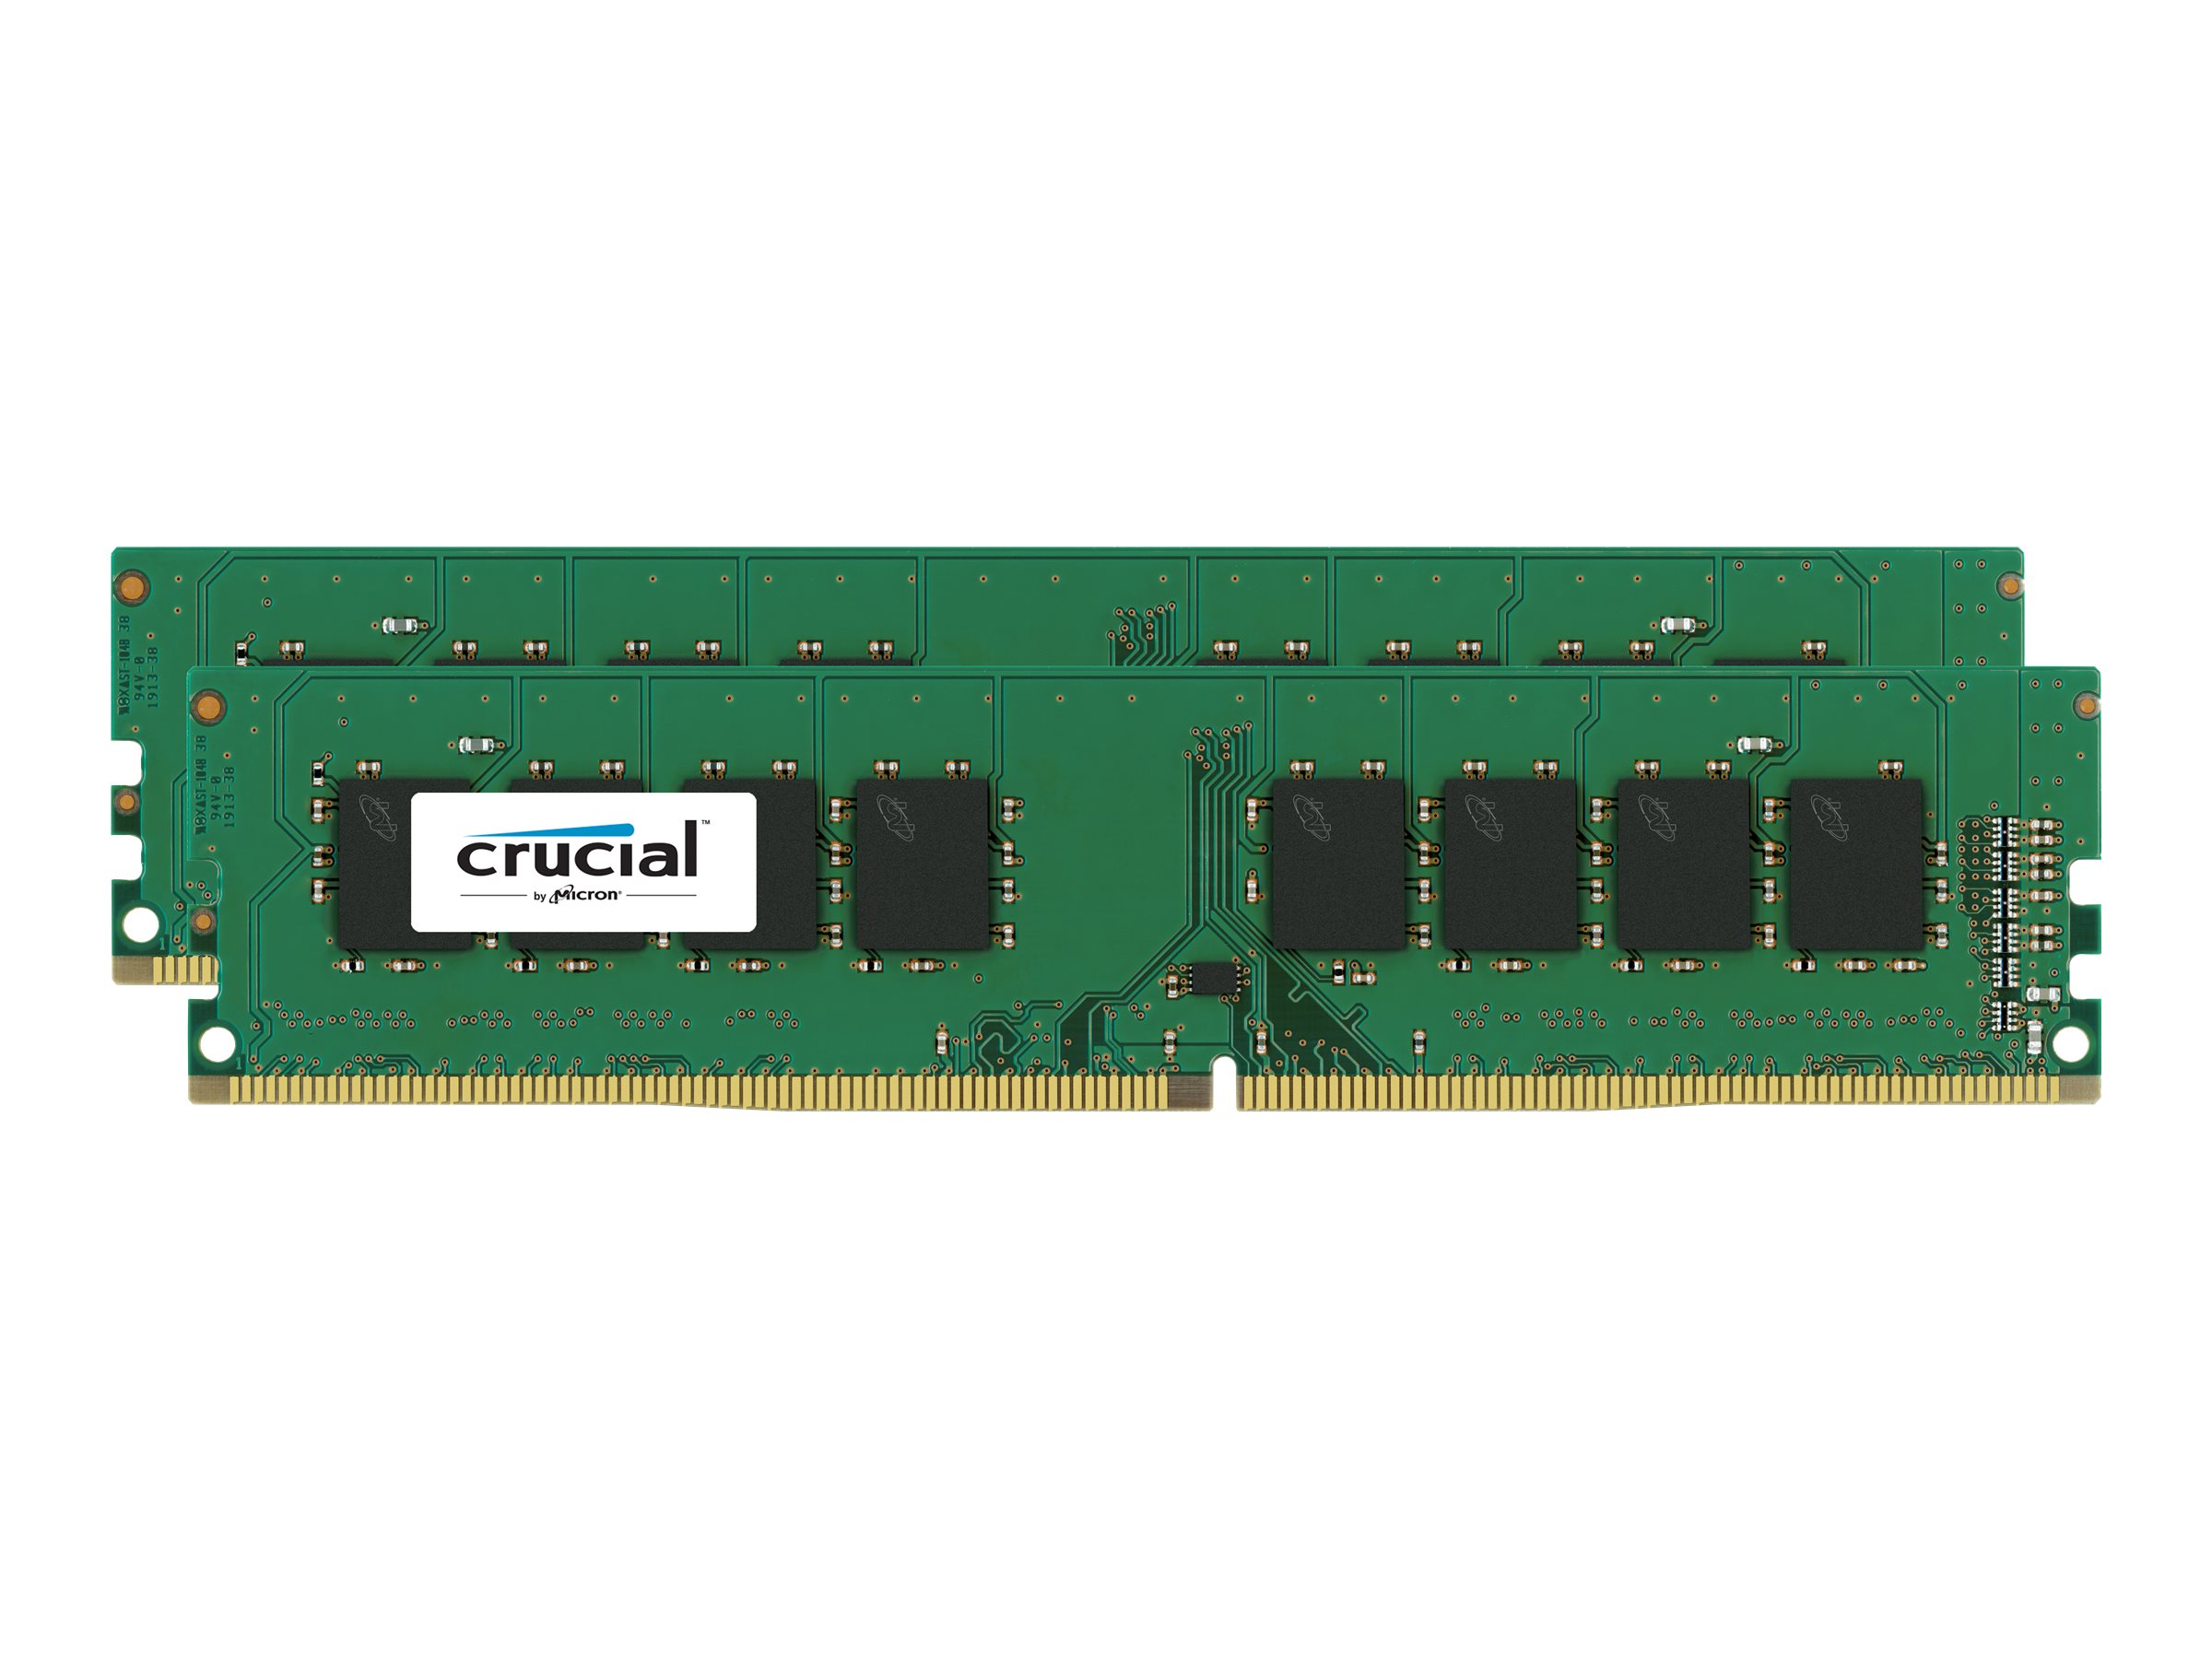 MICRON TECHNOLOGY 32GB KIT(16GBX2) DDR4 2400 MT/S (CT2K16G4DFD824A)